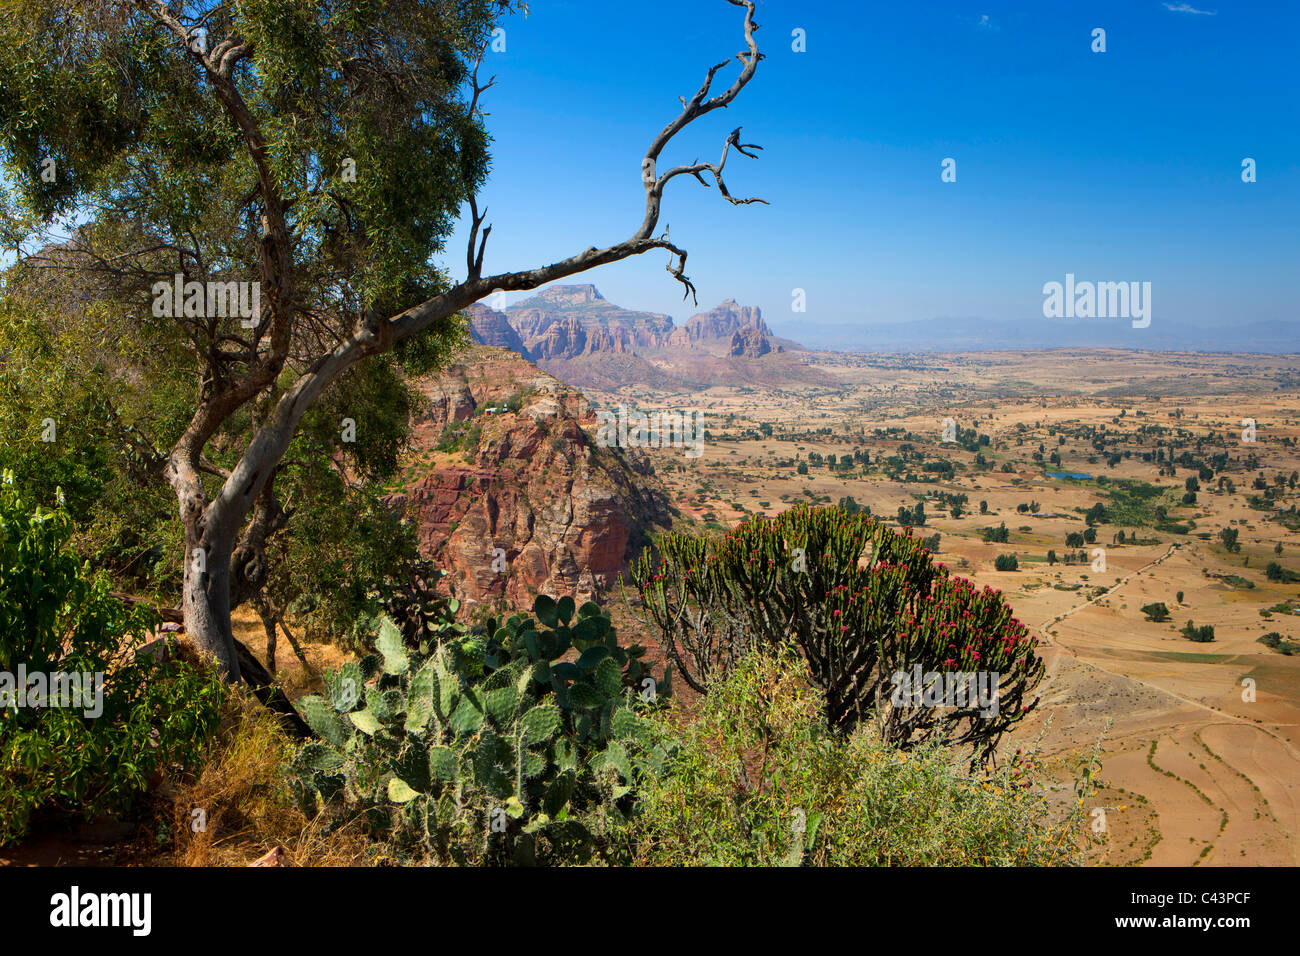 Gerealta, Africa, Ethiopia, highland, view point, tree, cacti Stock Photo